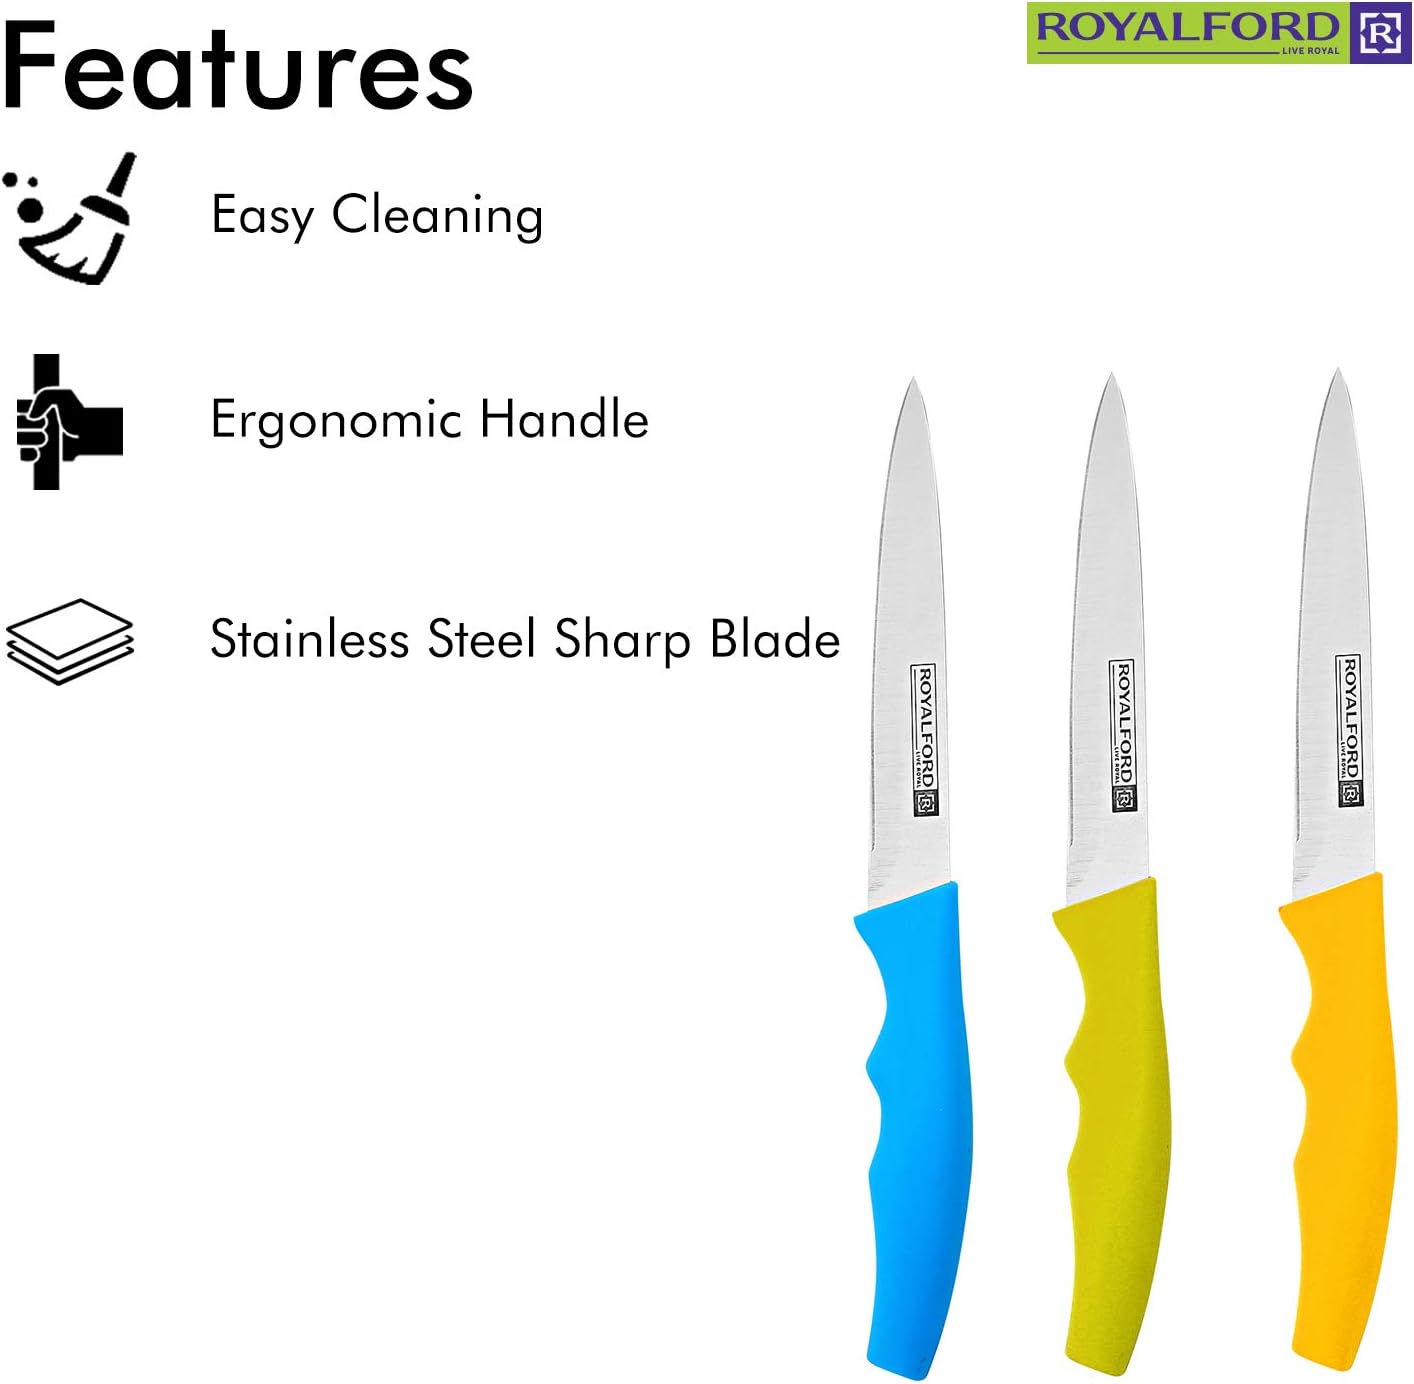 Royalford RF9872 Stainless Steel Scraper - Portable Ergonomic Long